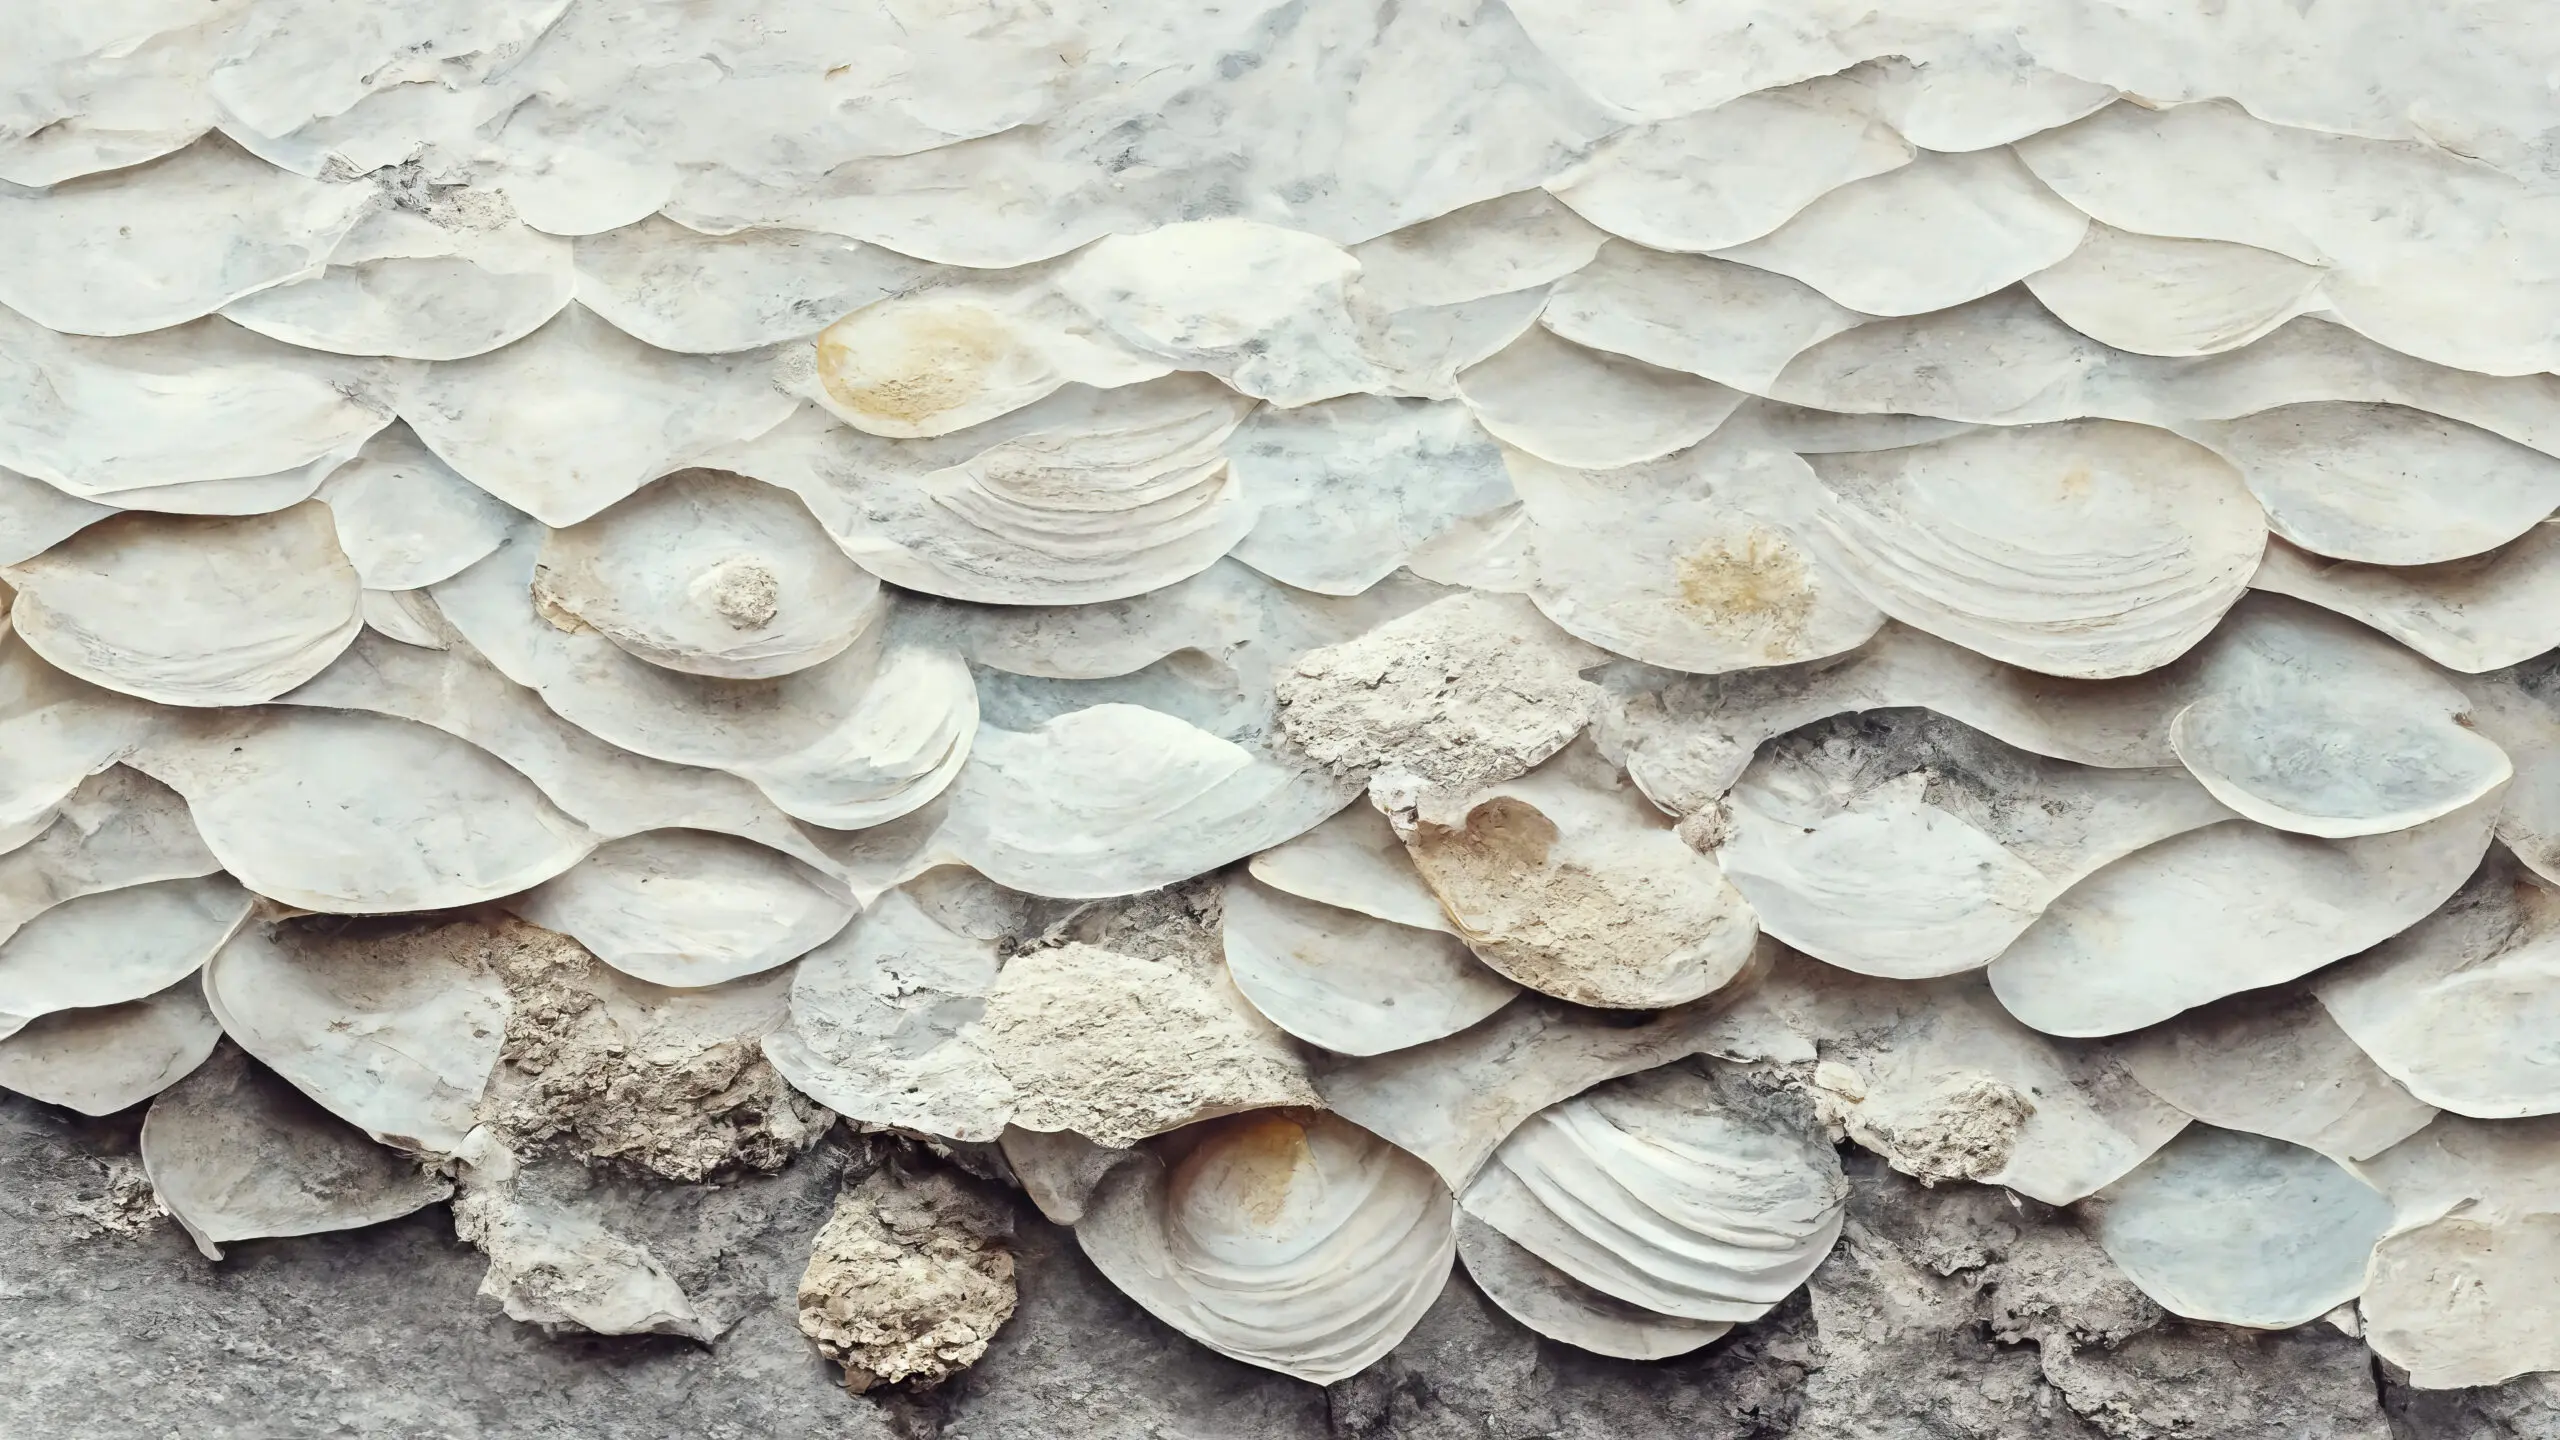 Wandbild (21961) Sea Shells Detail No 7 by Treechild präsentiert: Details und Strukturen,Abstrakt,Natur